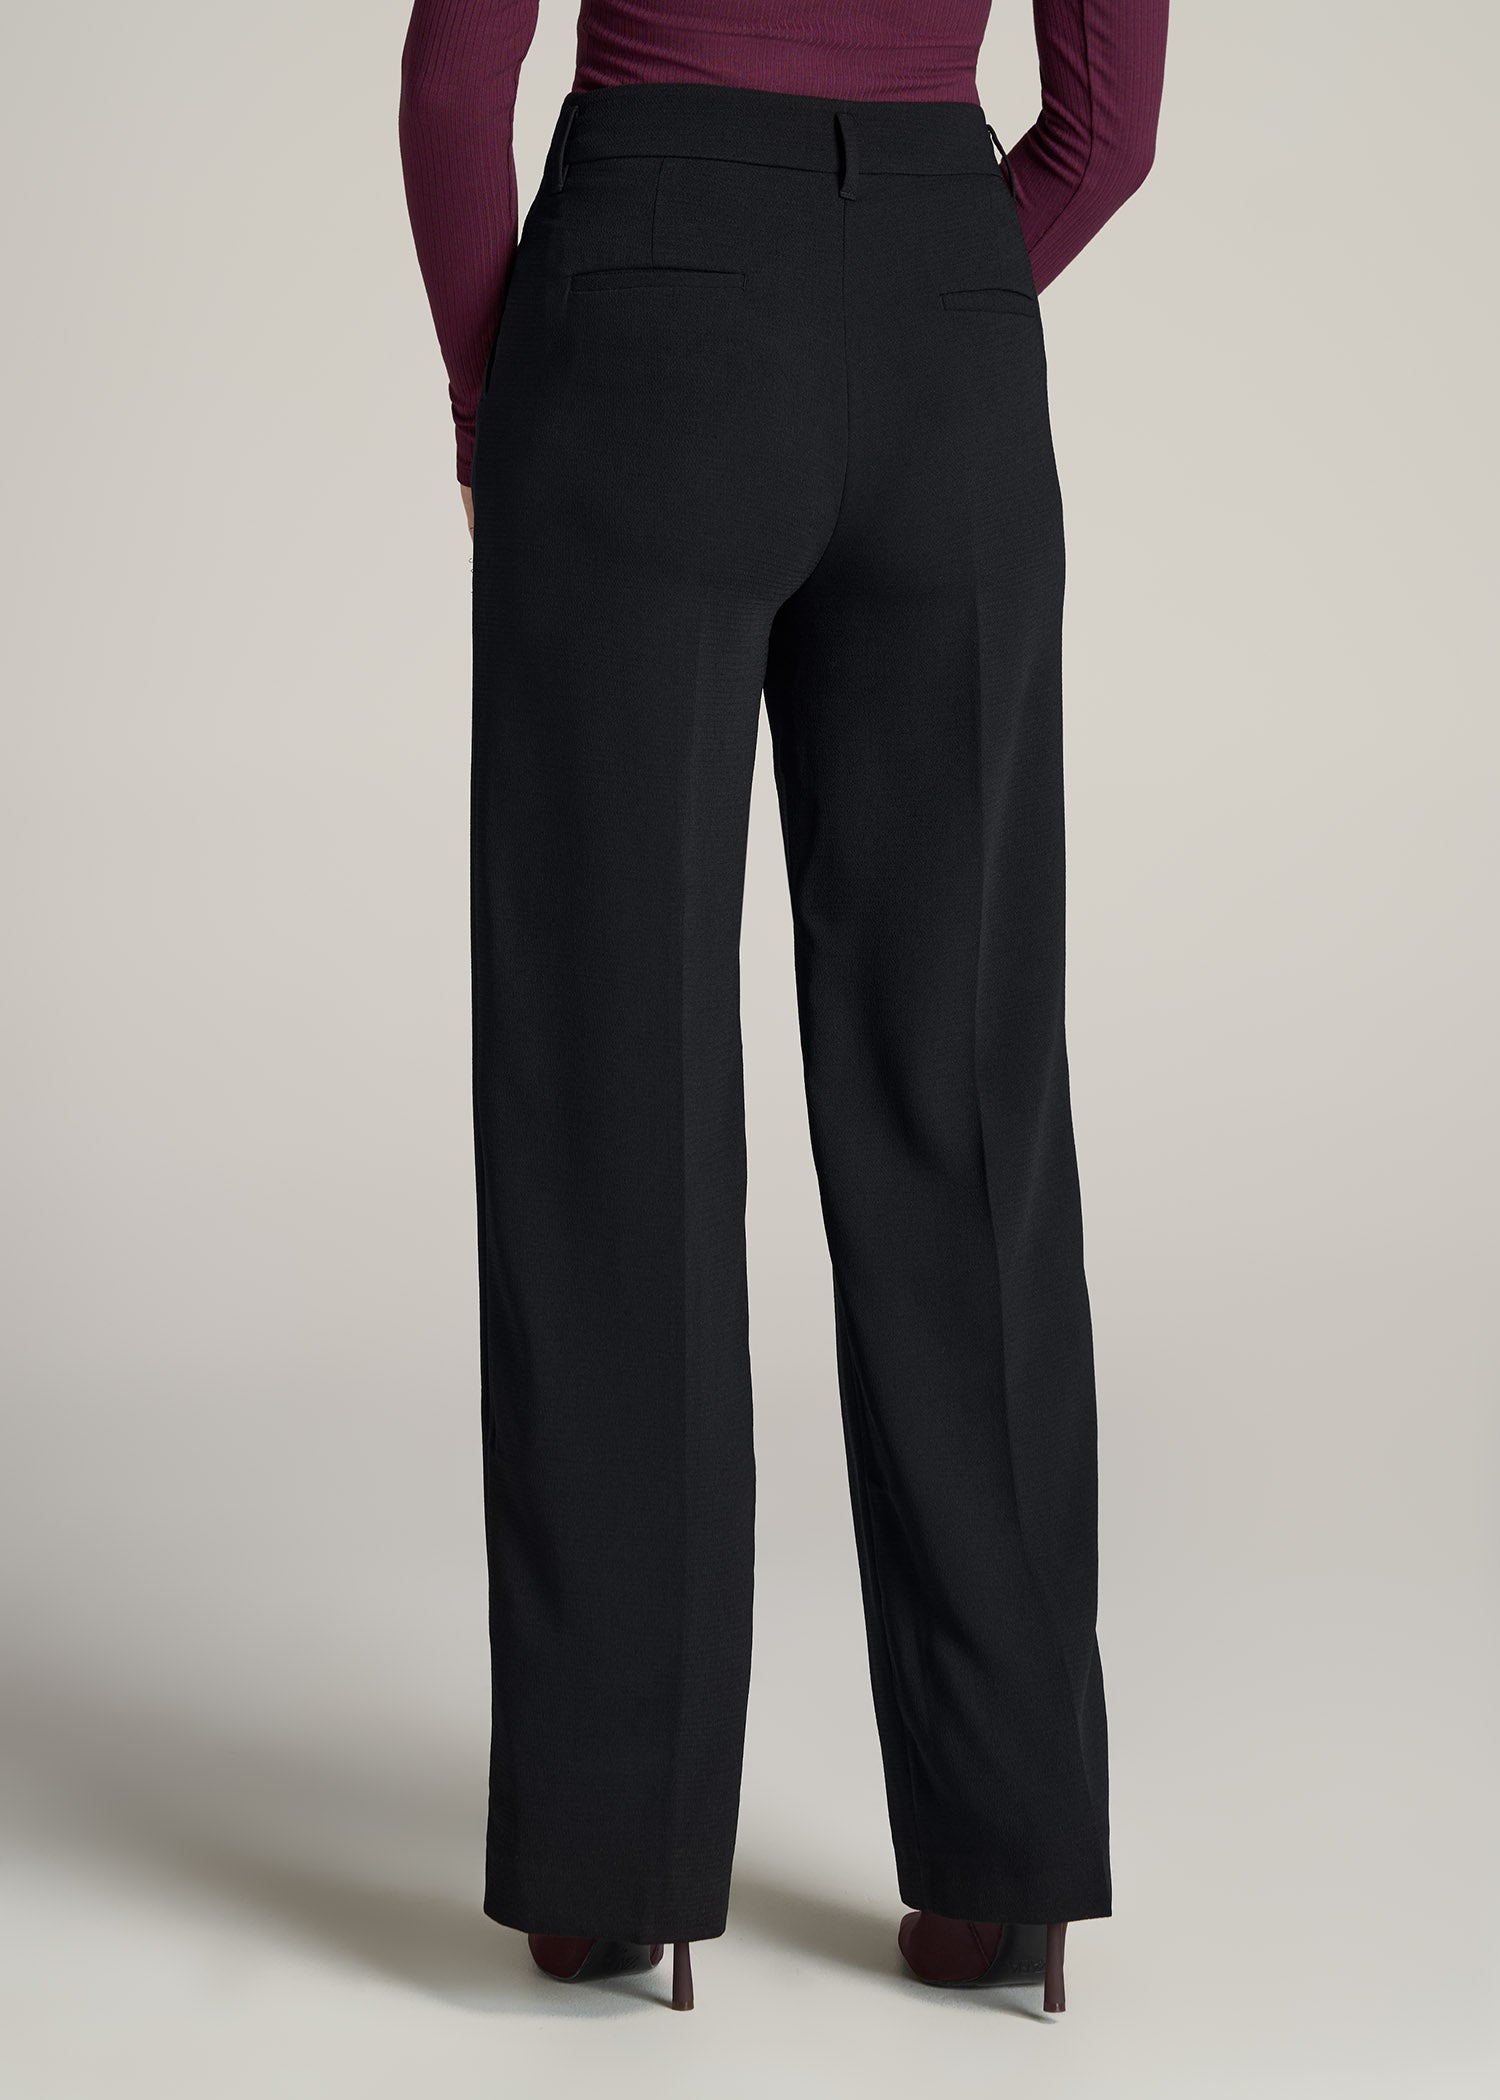 Cotton Flex Stretchable Slim Fit Straight Casual Cigarette Pants Trouser  for Girls/Ladies/Women (Free Size)